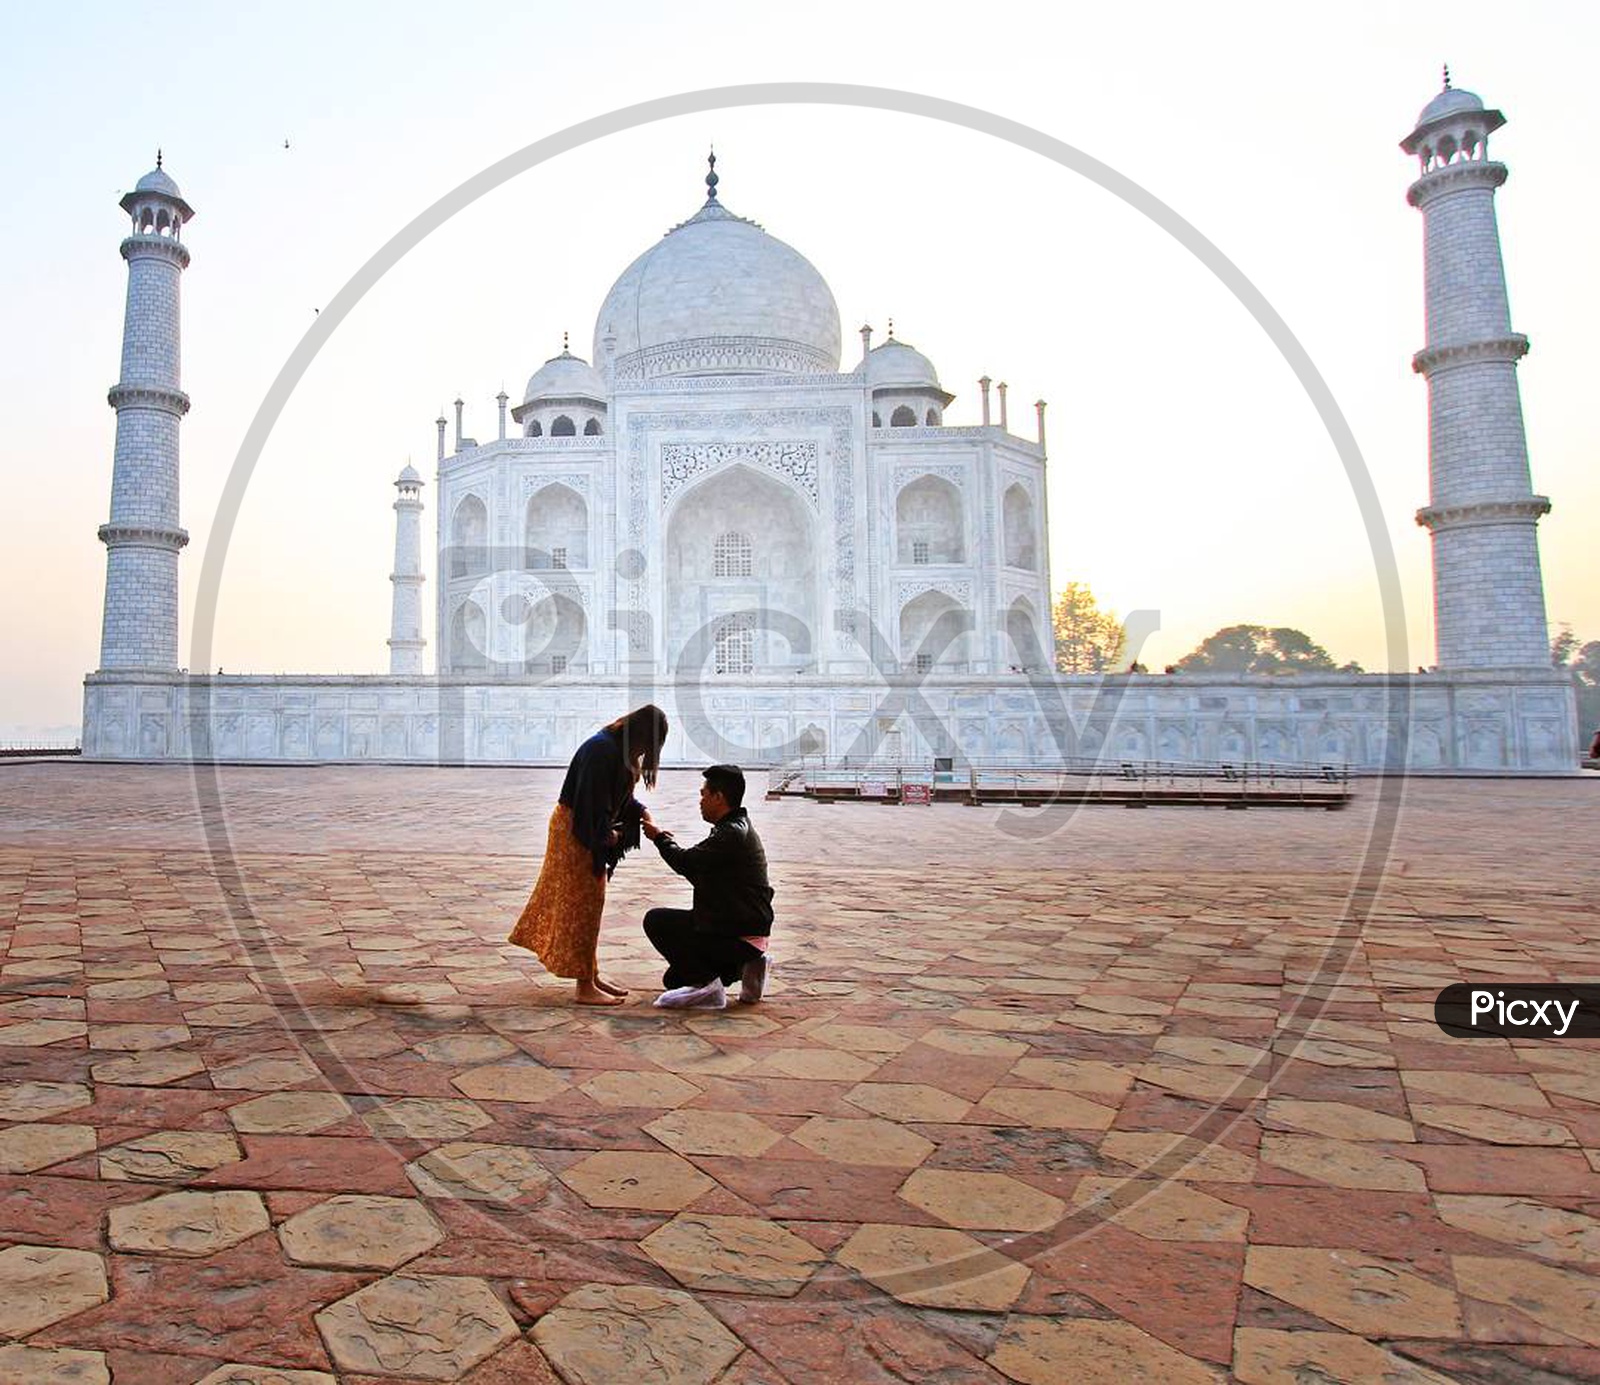 The Proposal - Taj Mahal/7 Wonders